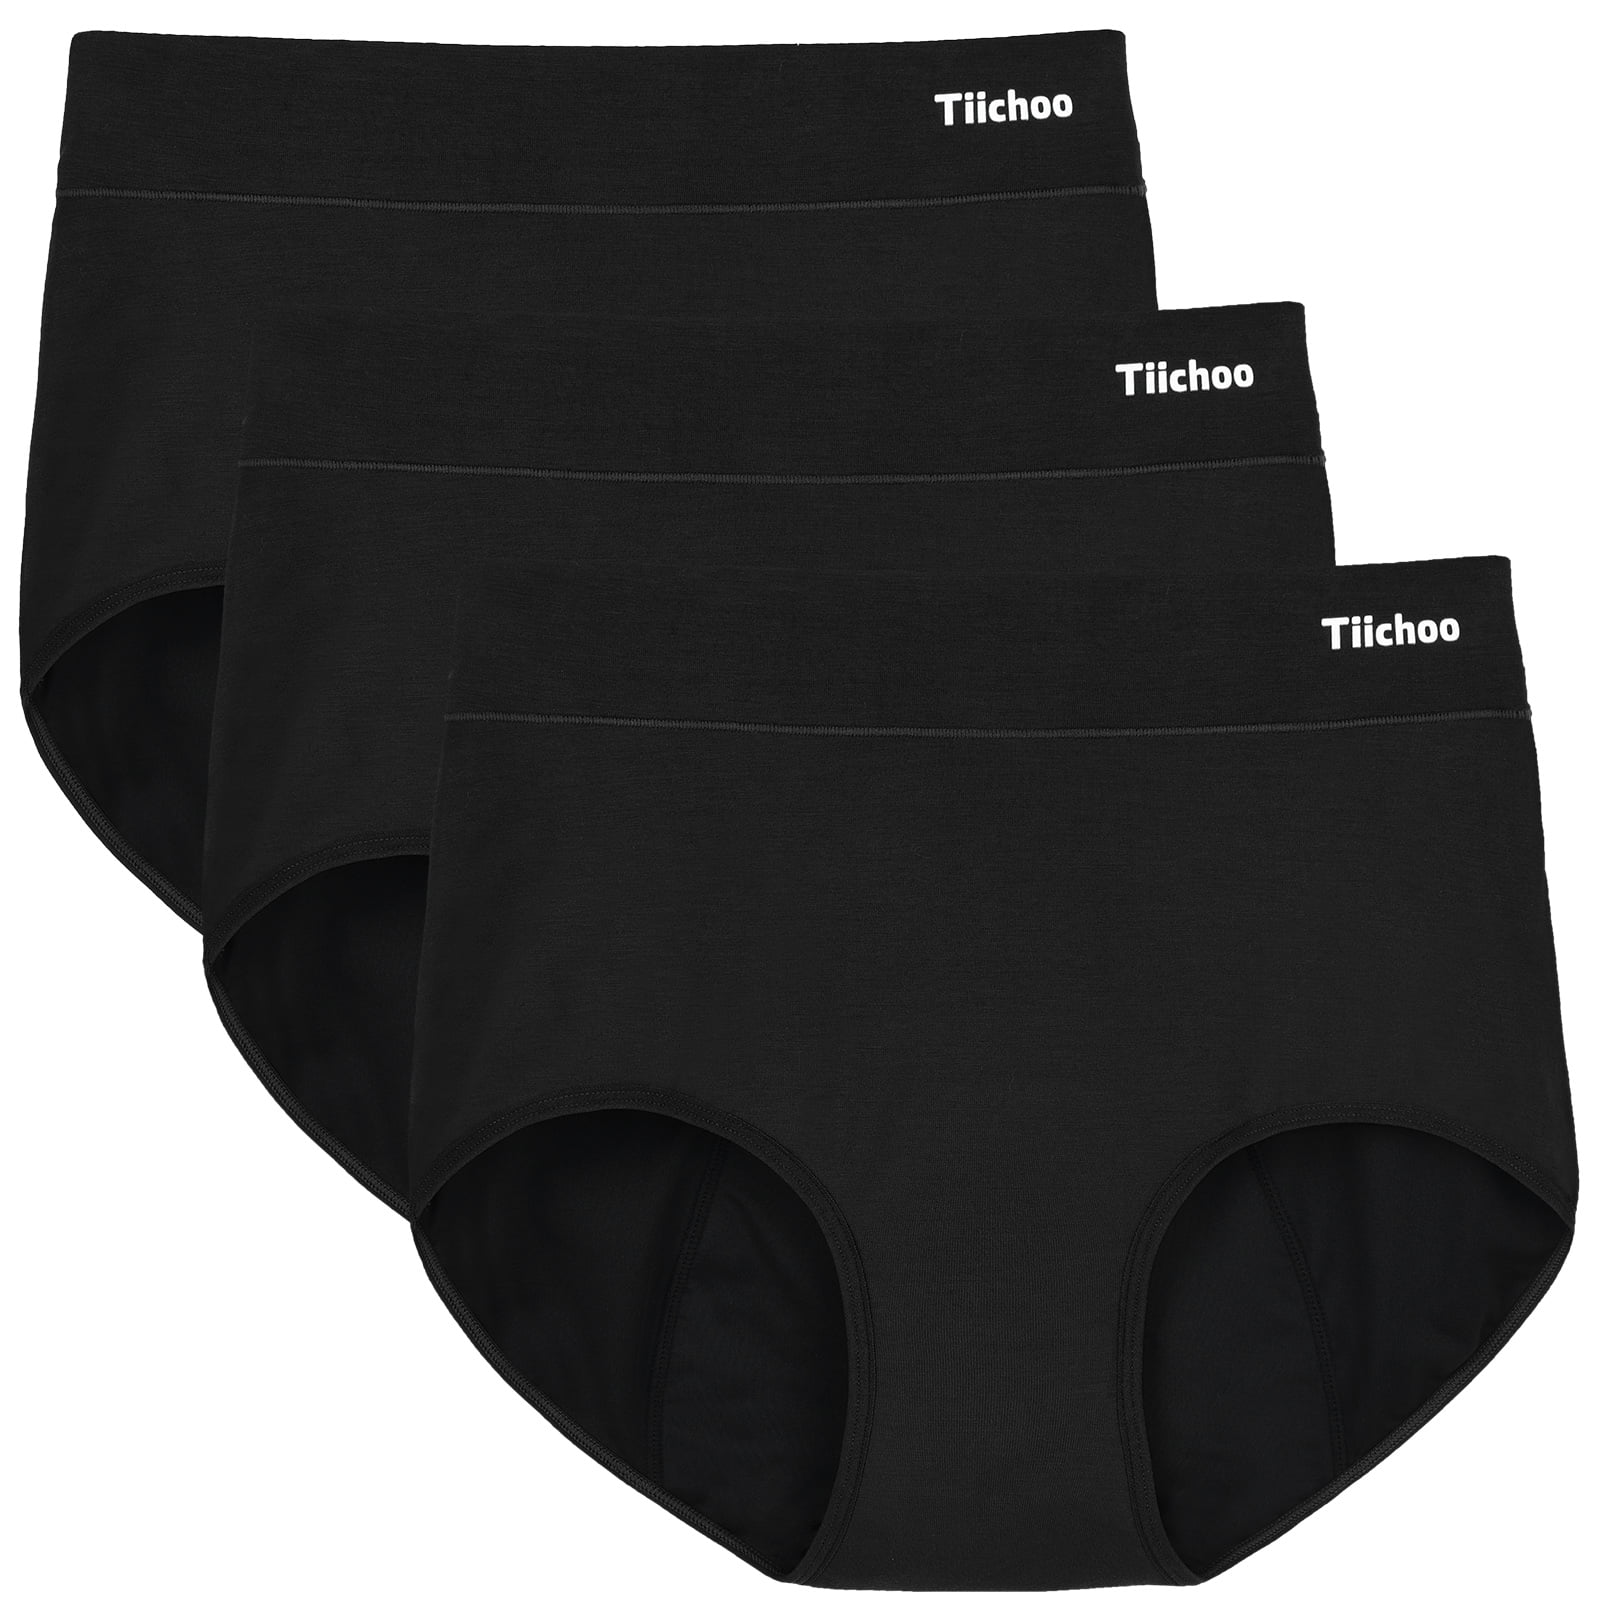  TIICHOO Period Thong Underwear Lace Period Panties Light  Absorbency Seamless Leakproof Underwear For Women Pack Of 3